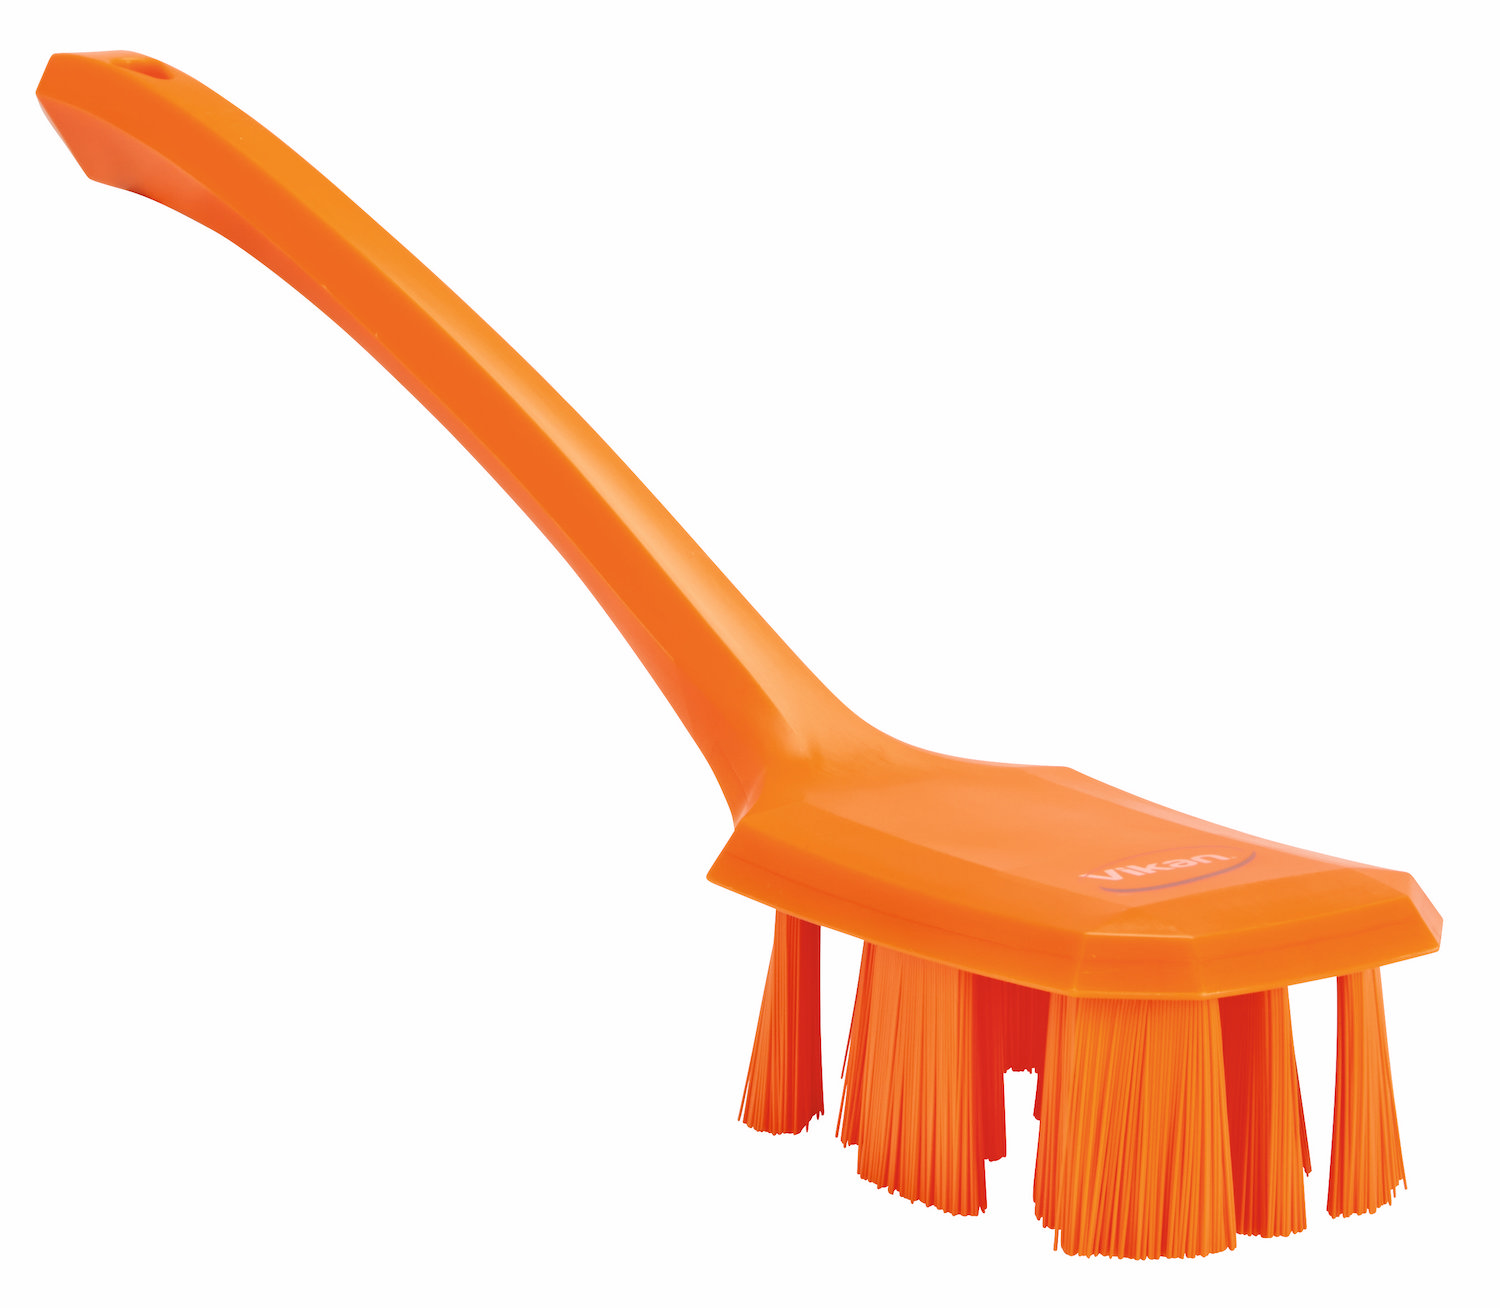 UST Hand Brush w/long Handle, 395 mm,
Hard, Orange